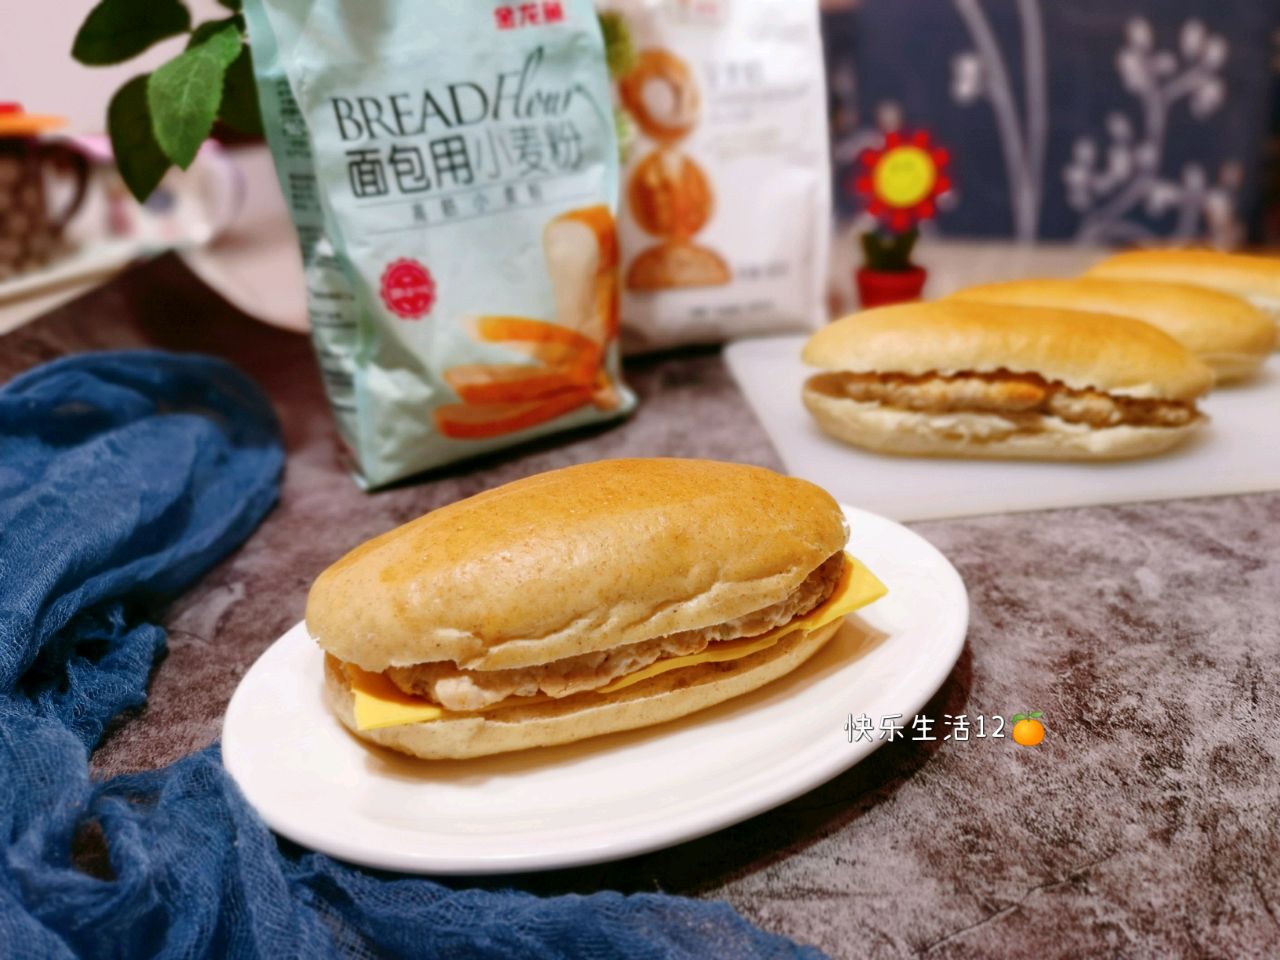 ciabatta 帕尼尼三明治配鸡肉和番茄高清摄影大图-千库网